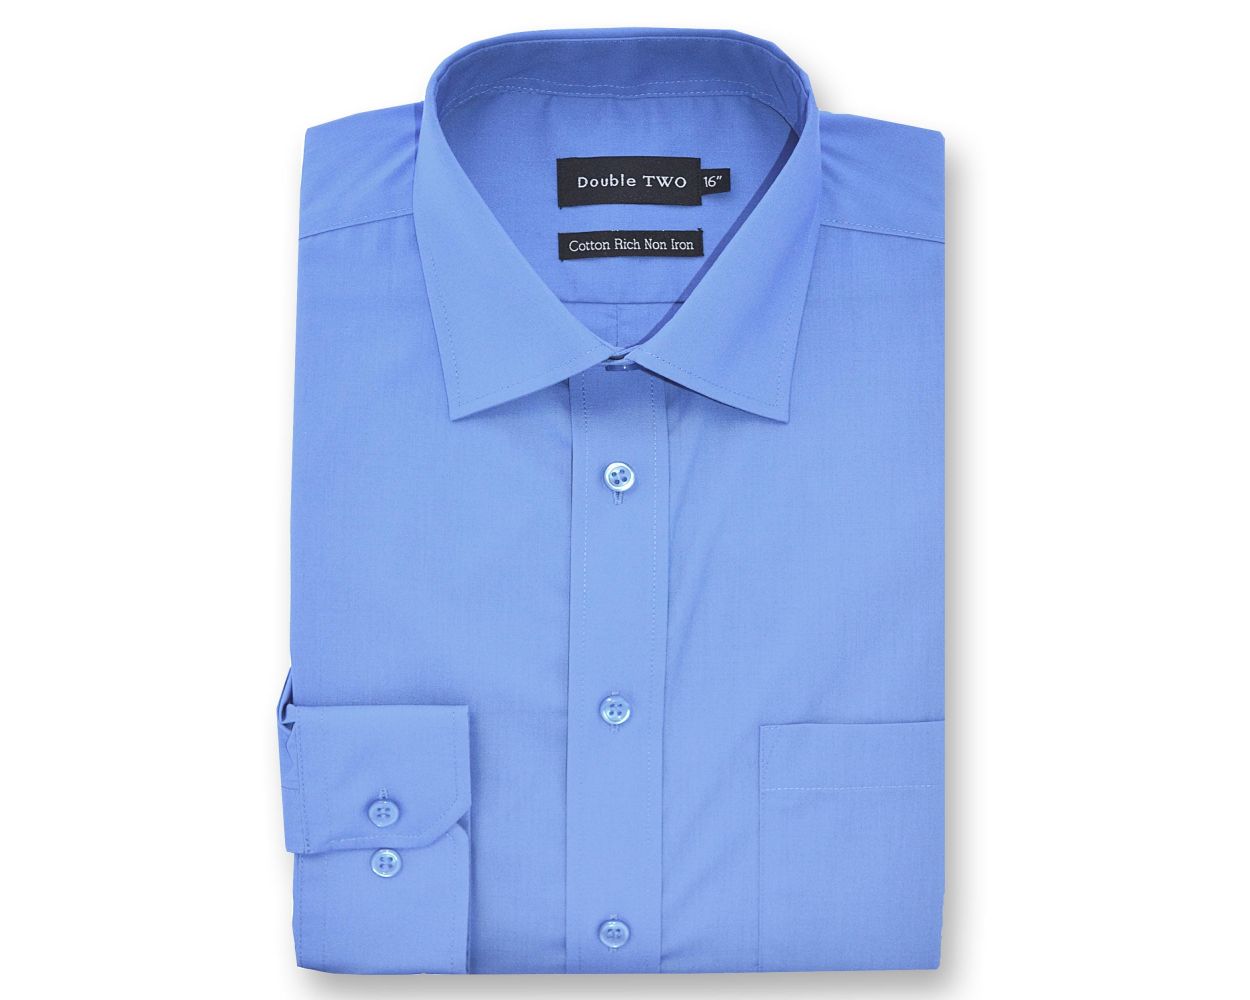 Men's Cornflower Blue Long Sleeved Non-Iron Shirt | Double TWO